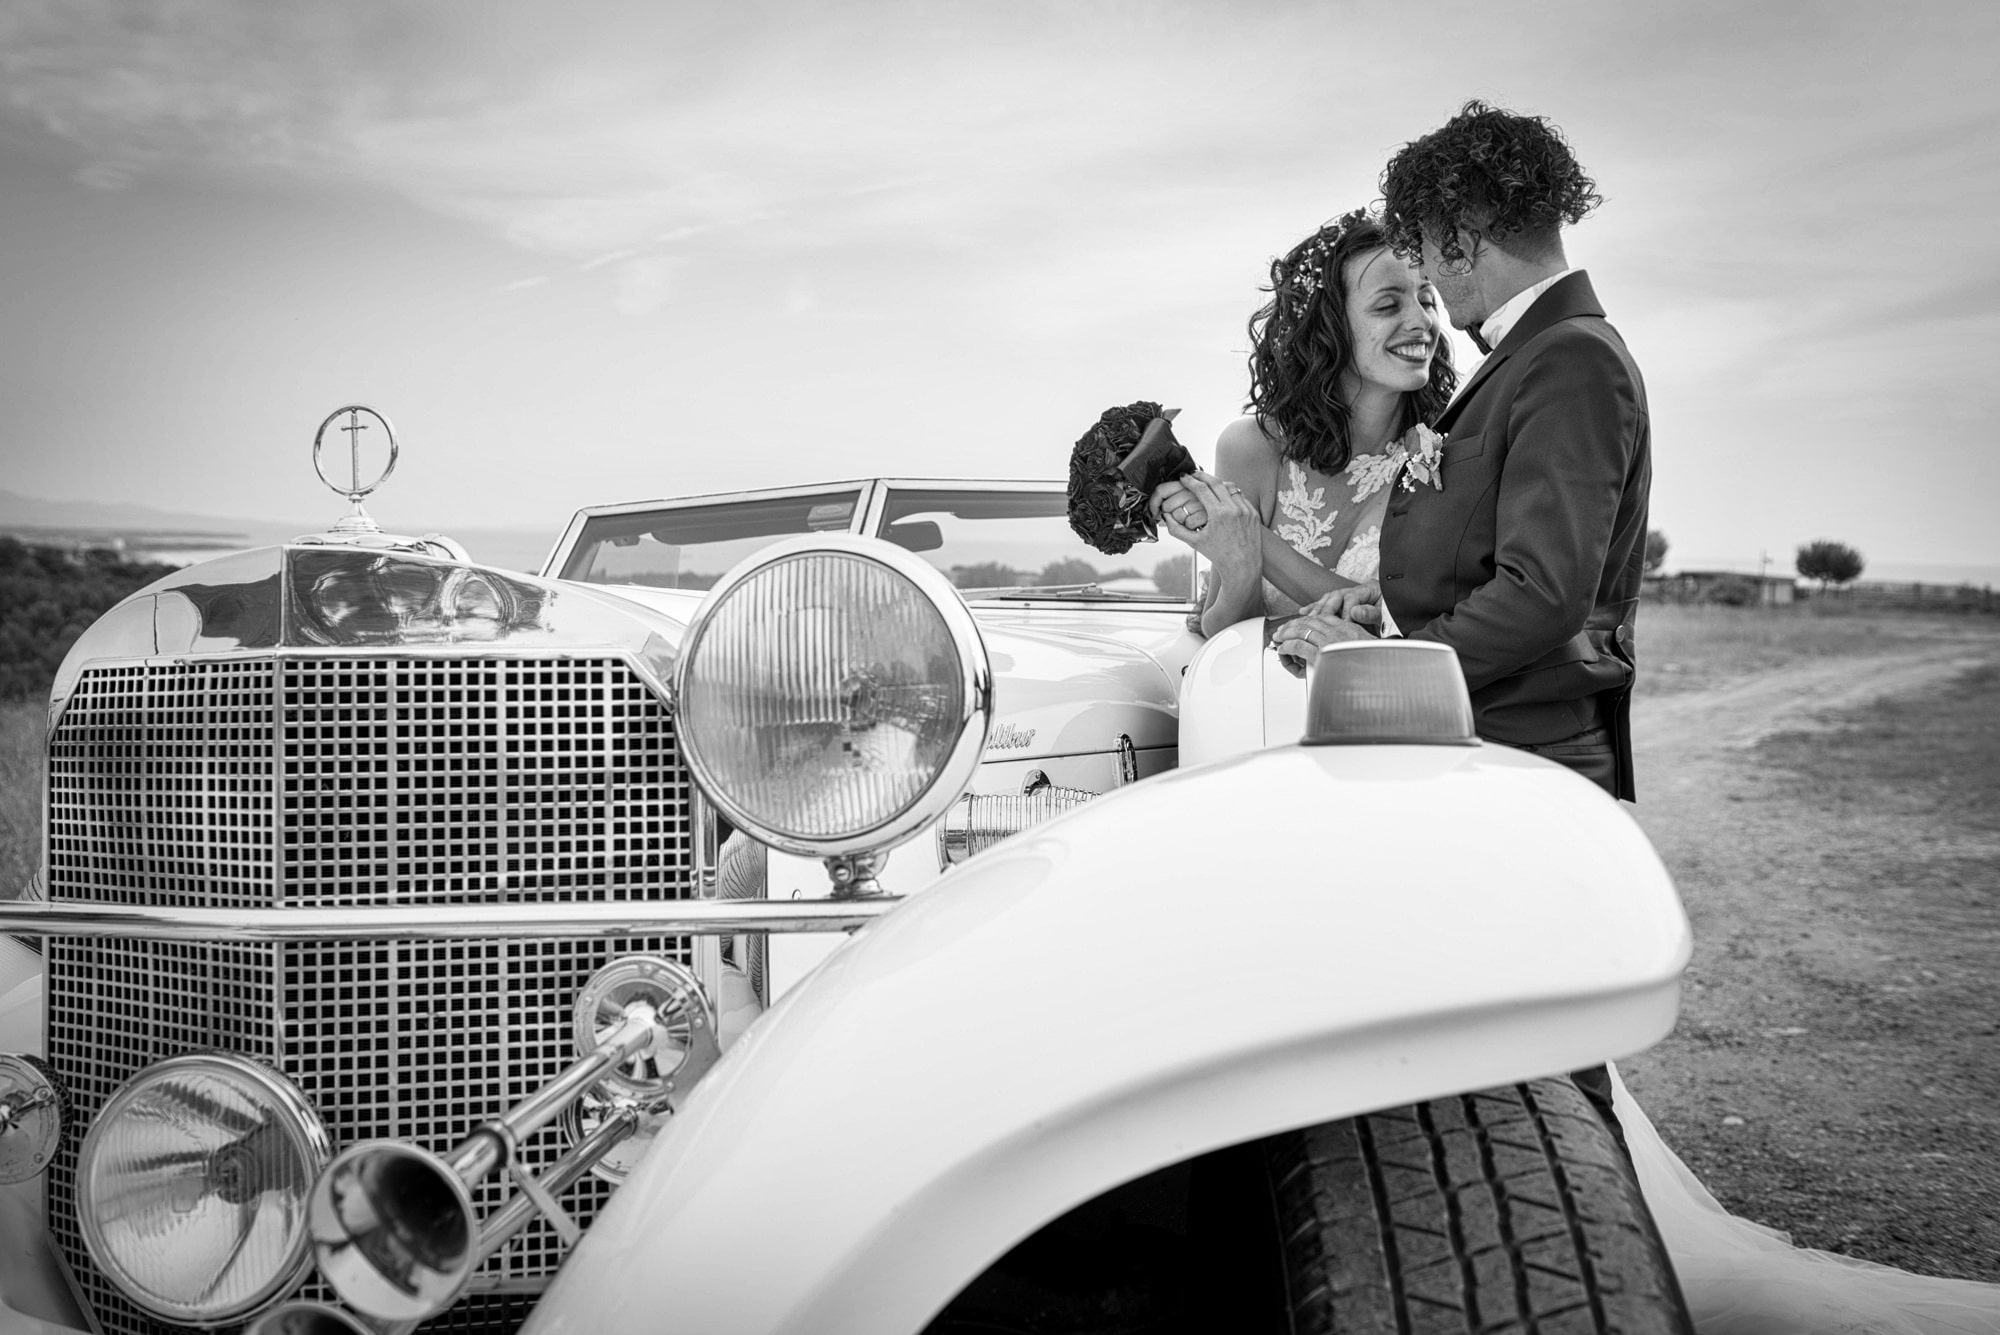 Just Married - Studio Fotografico Livorno background image